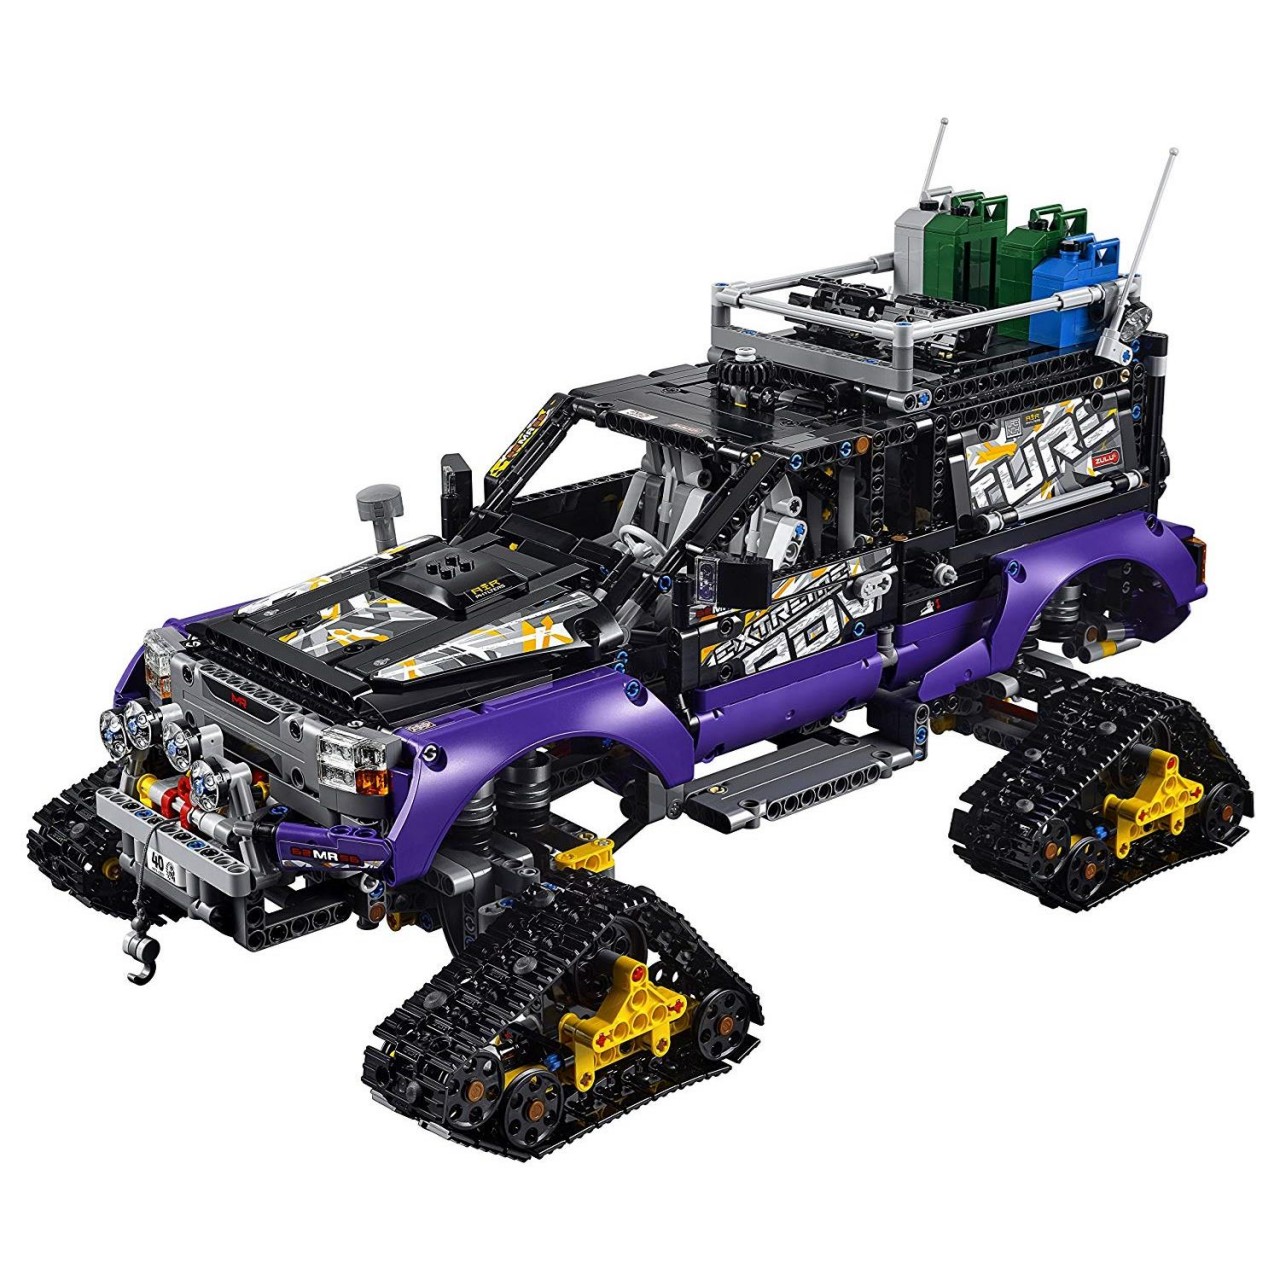 LEGO TECHNIC 42069 Extremgeländefahrzeug